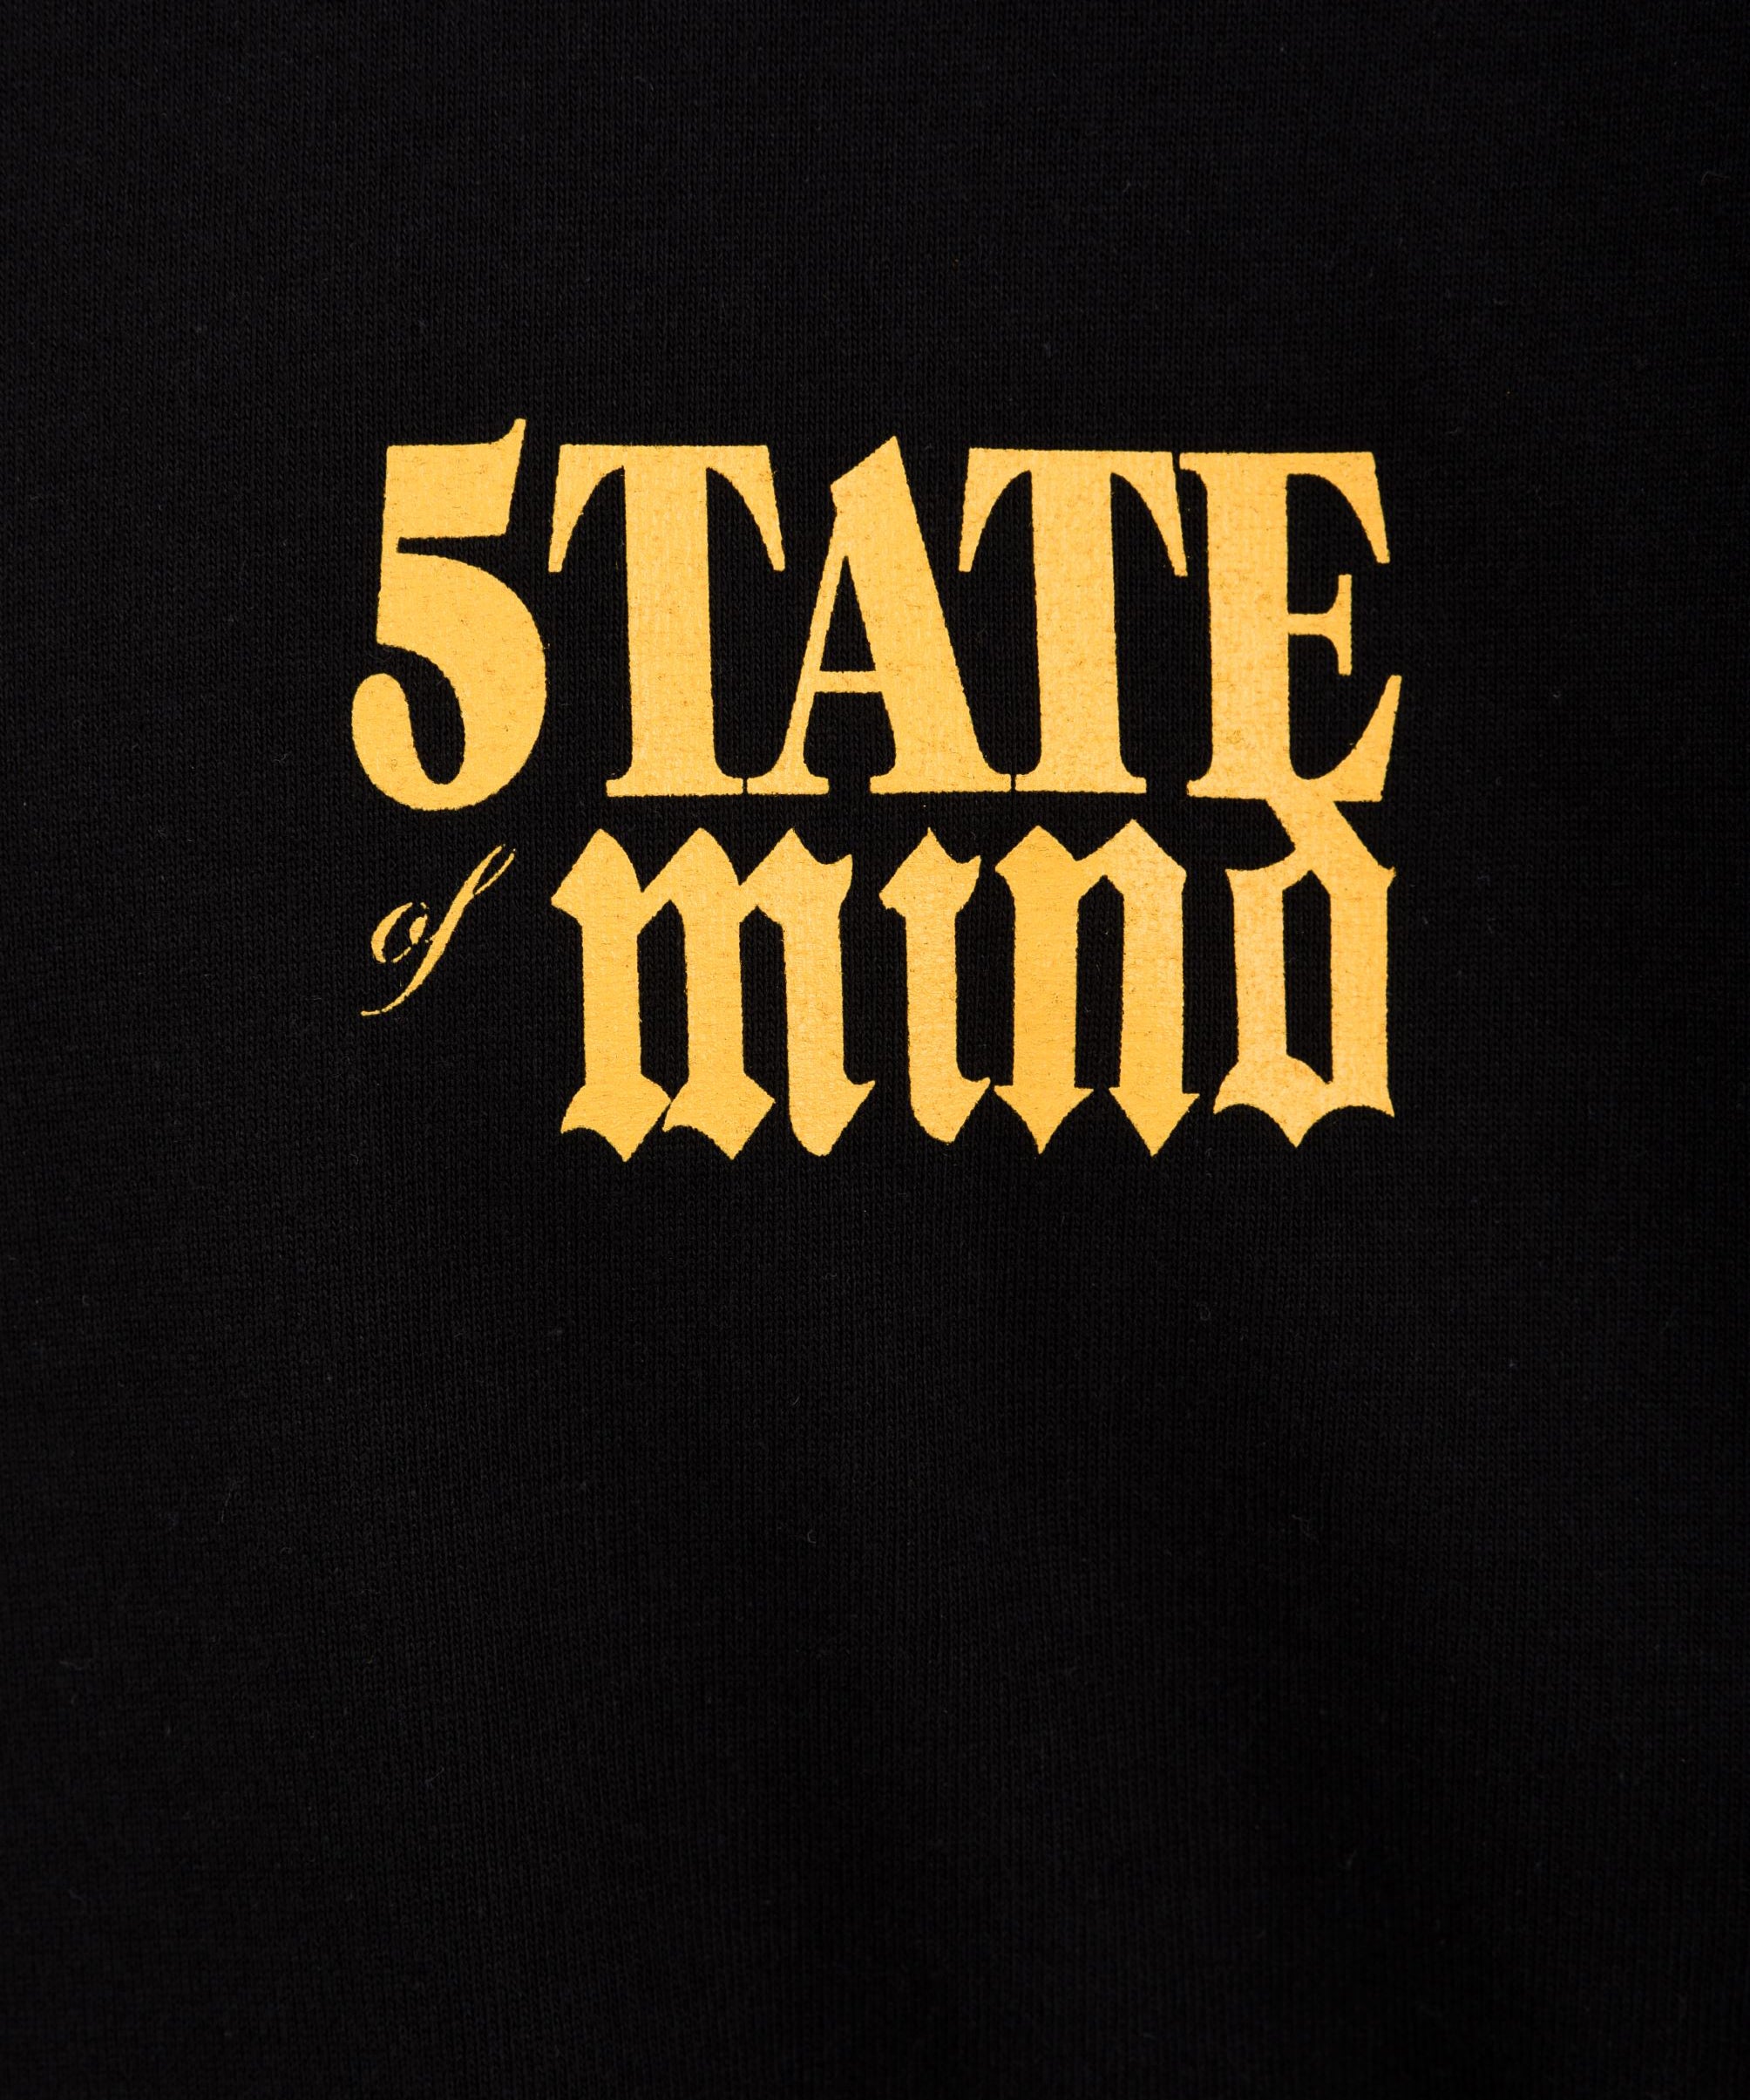 T-shirt 5TATE OF MIND Uomo TSSOM4122 Nero